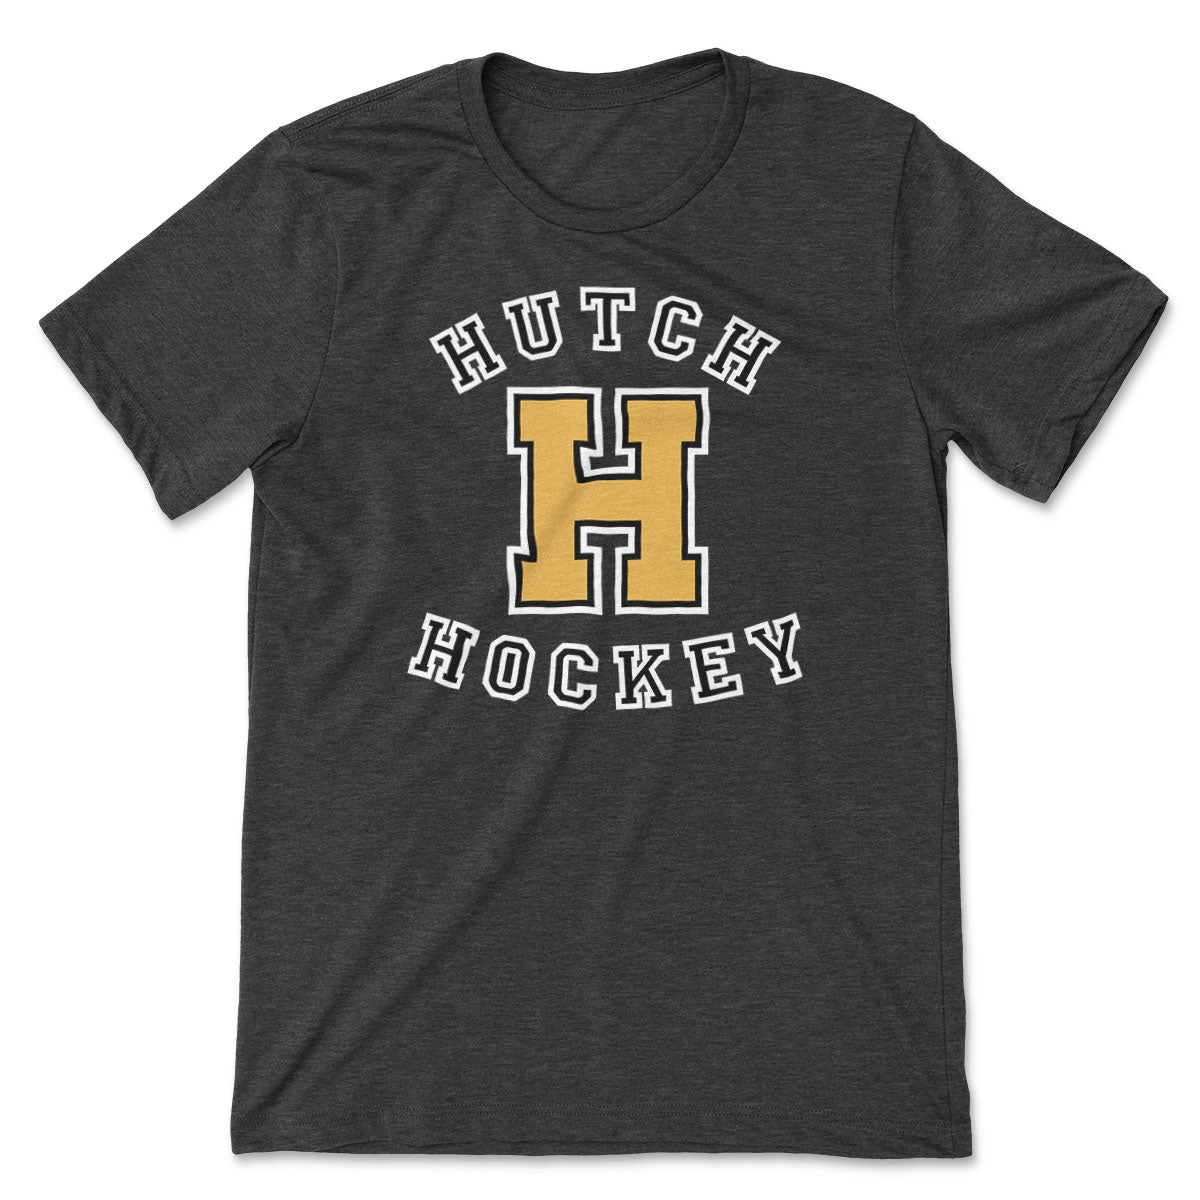 Hutchinson Girls Hockey // Youth Tee